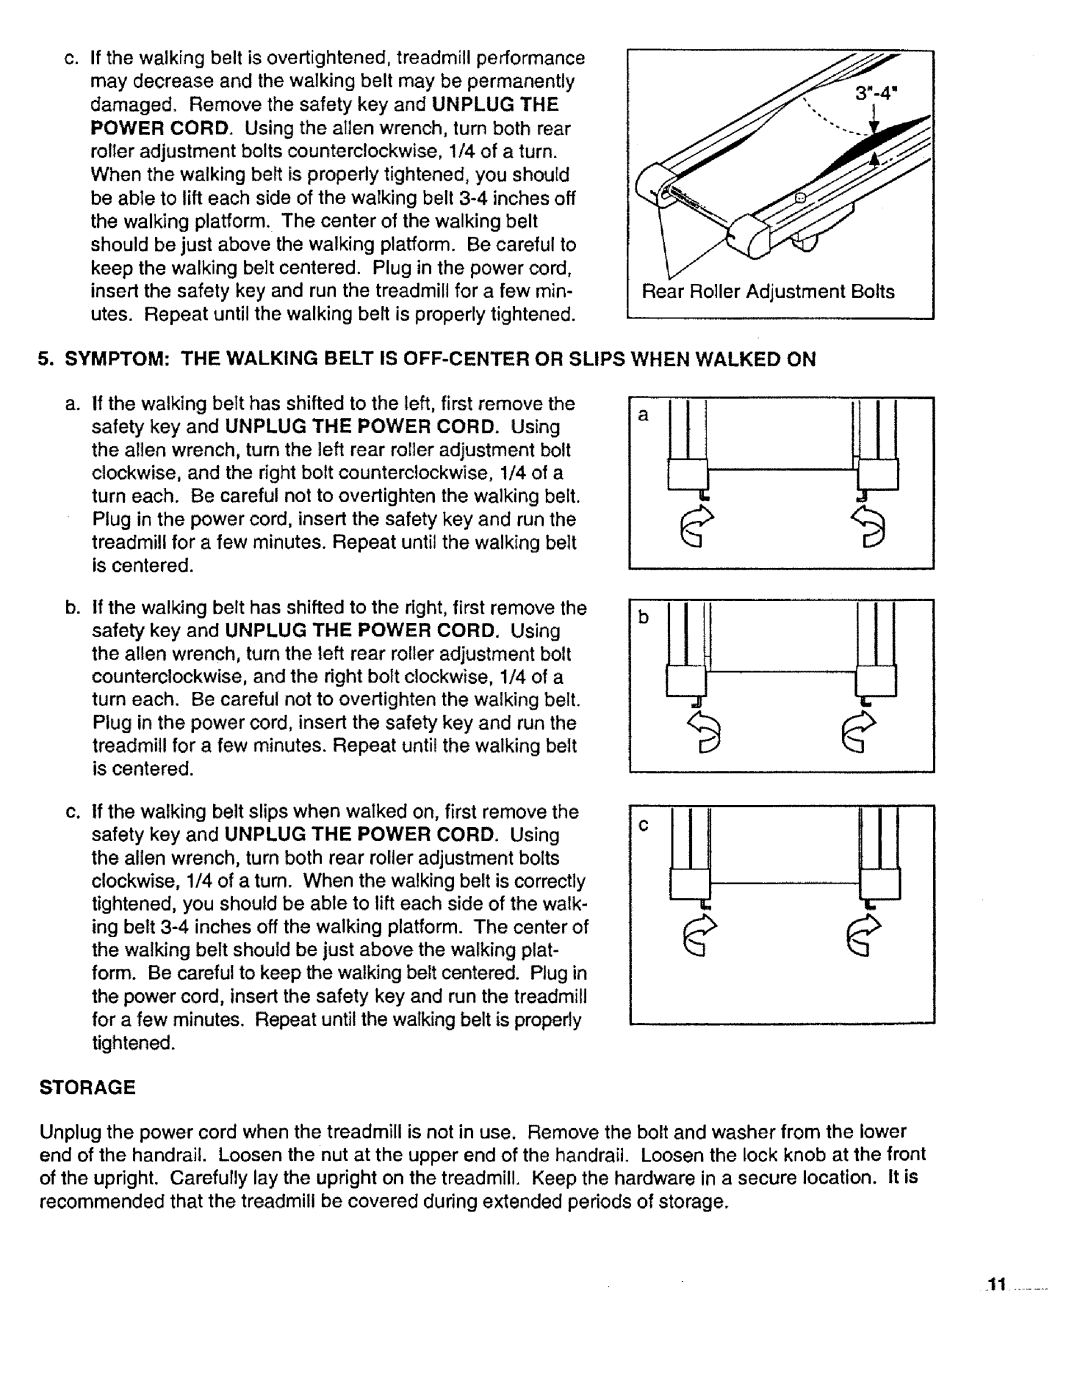 Sears 831.29725 owner manual Symptom The Walking Belt Is Off-Center Or Slips When Walked On, Storage 